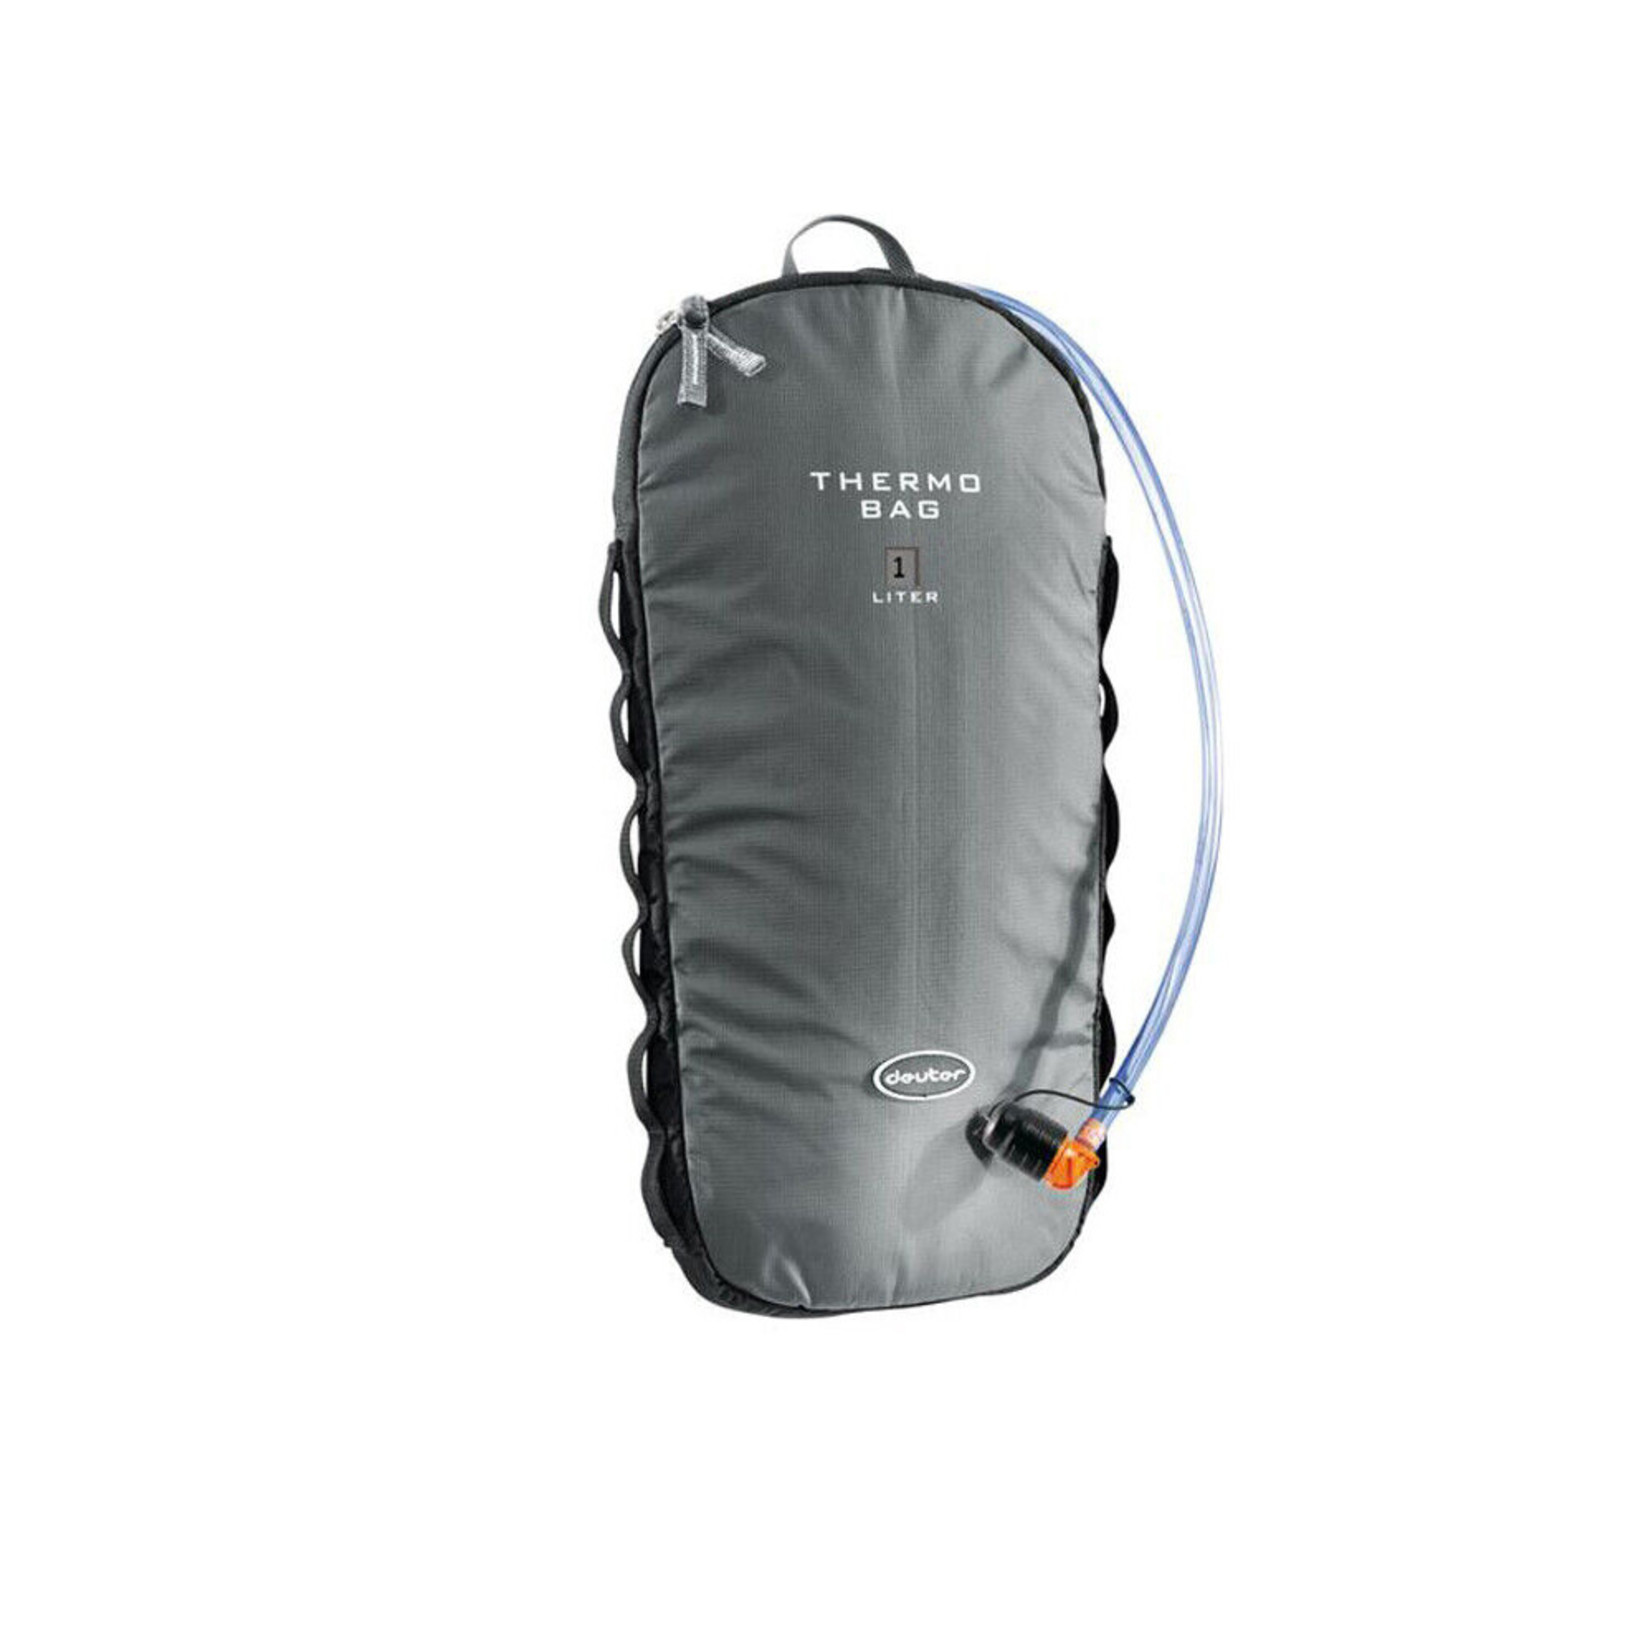 Deuter Deuter Streamer Thermo Bag 1L Suitable For Drink Bottles And Food